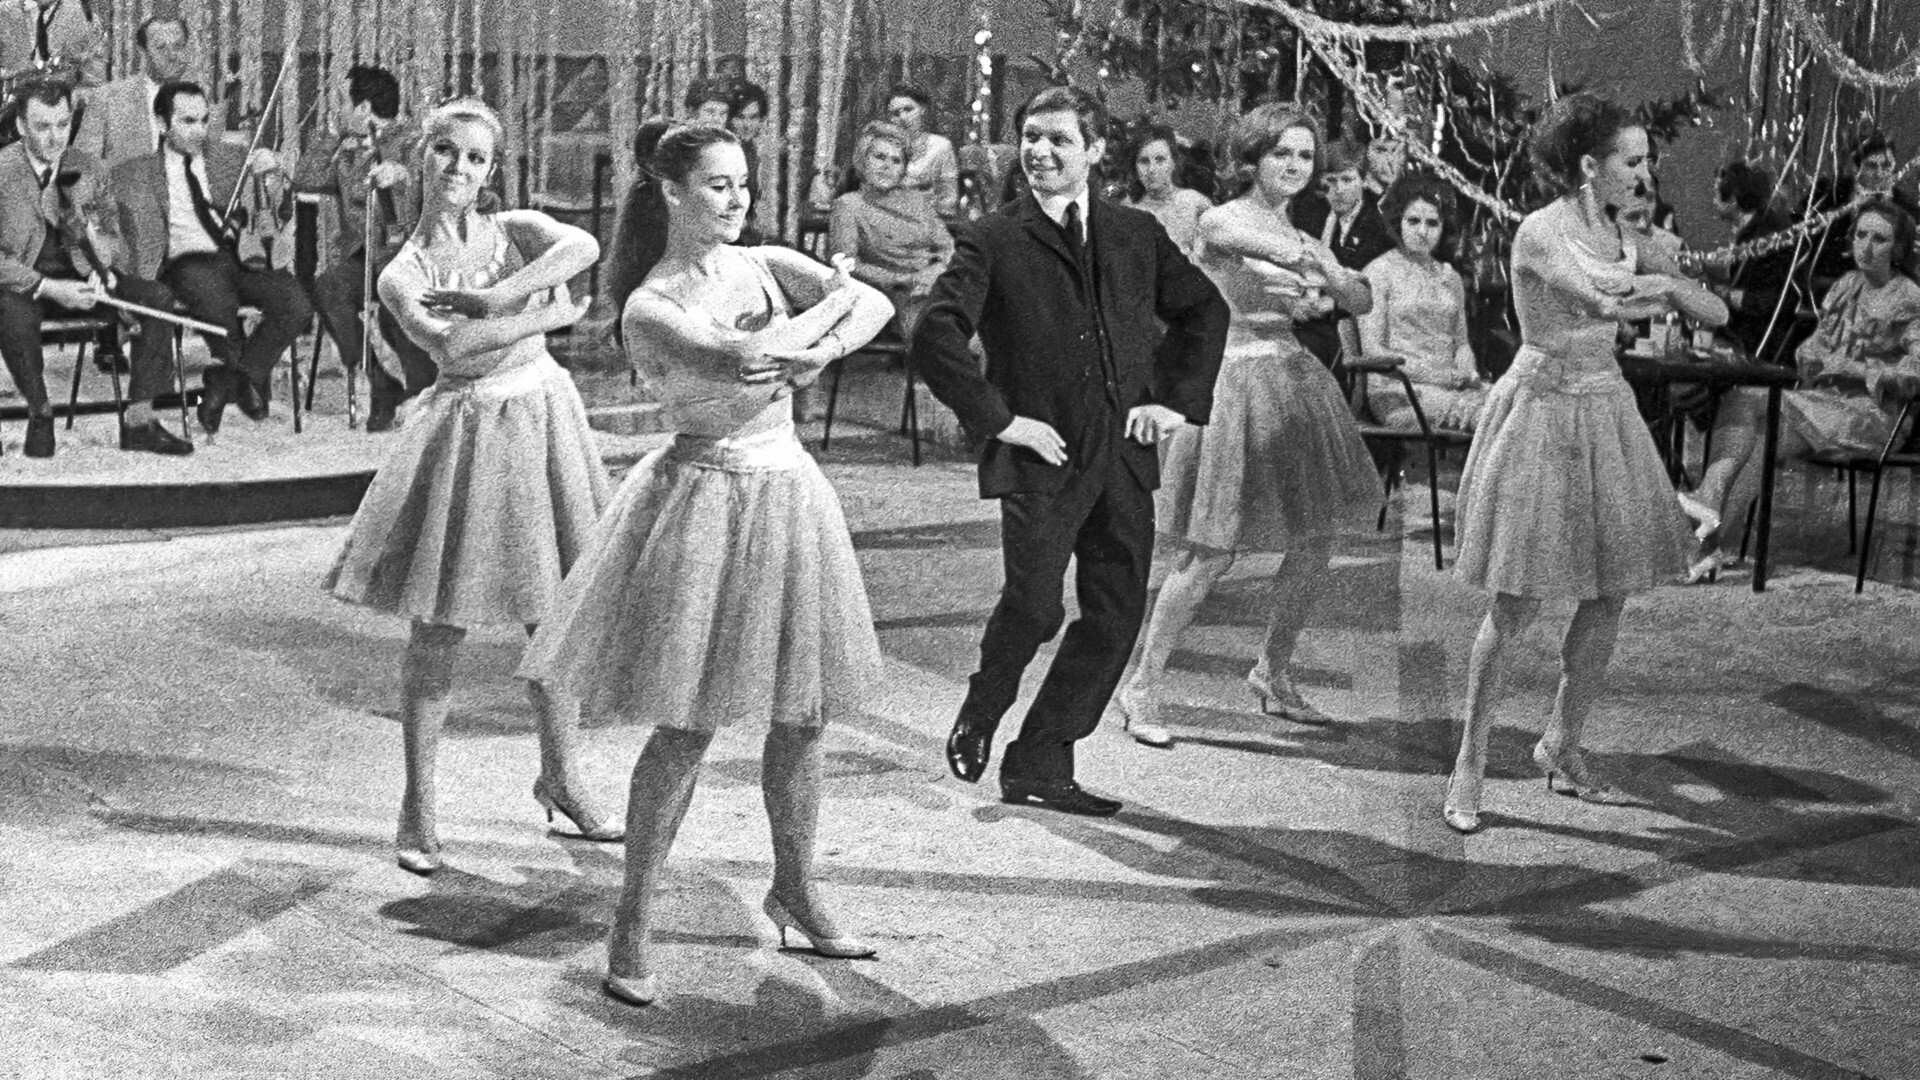 Moskow, Uni Soviet. Penyanyi Eduard Khil dan band dansa "Alye parusa" tampil di Central Television di acara TV "Little Blue Light".